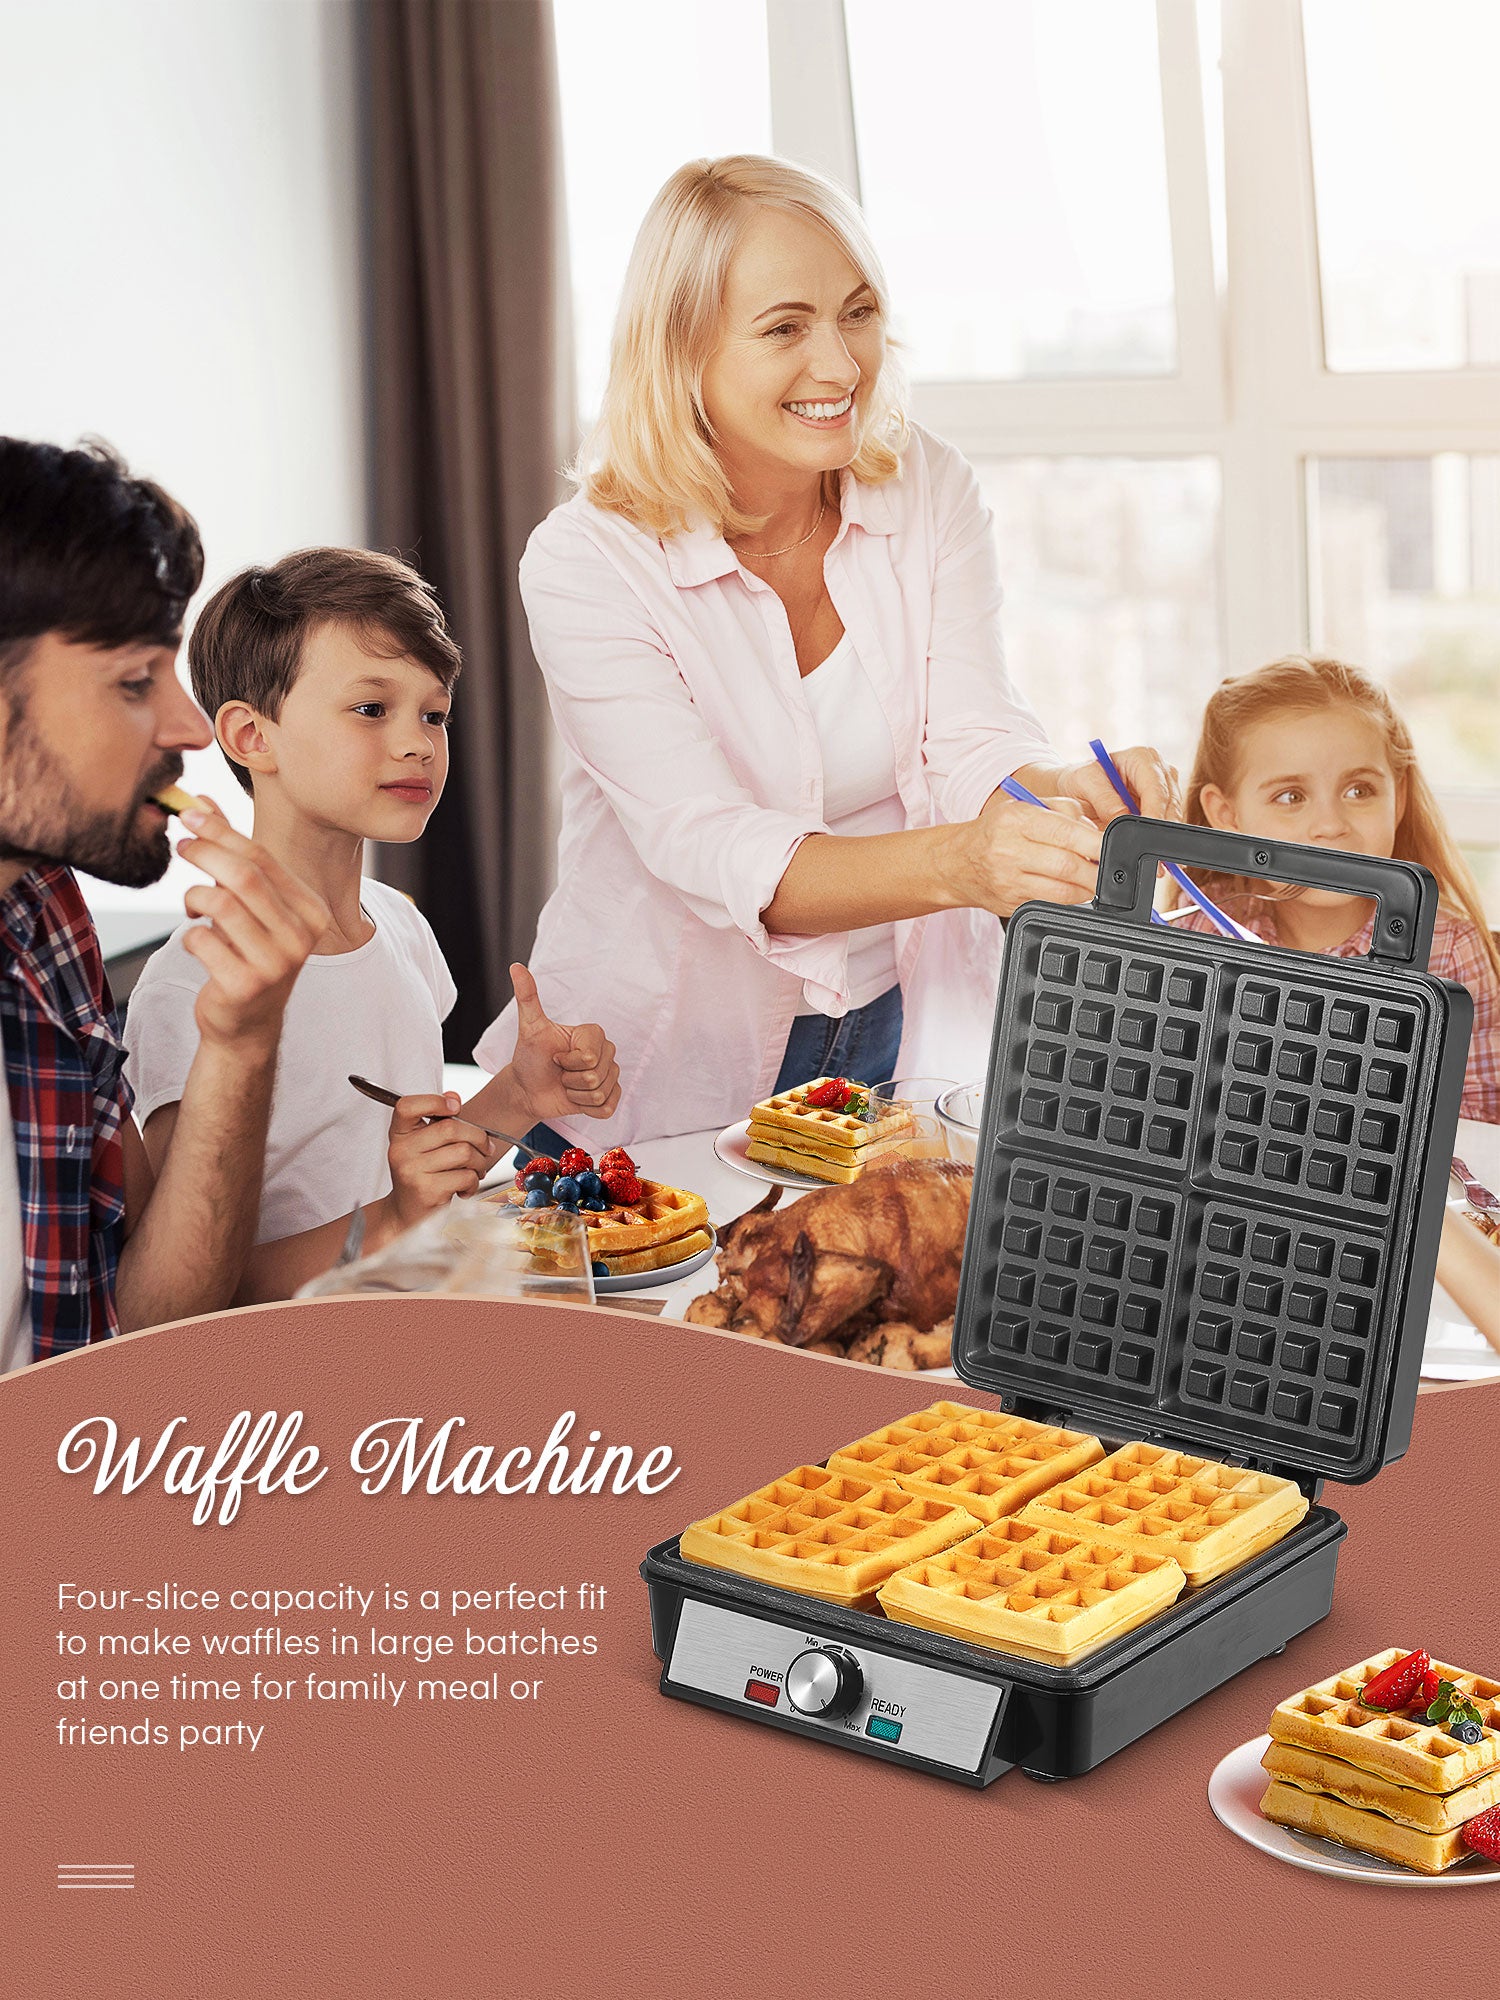 5 Dual Nonstick Rotating Waffle Maker